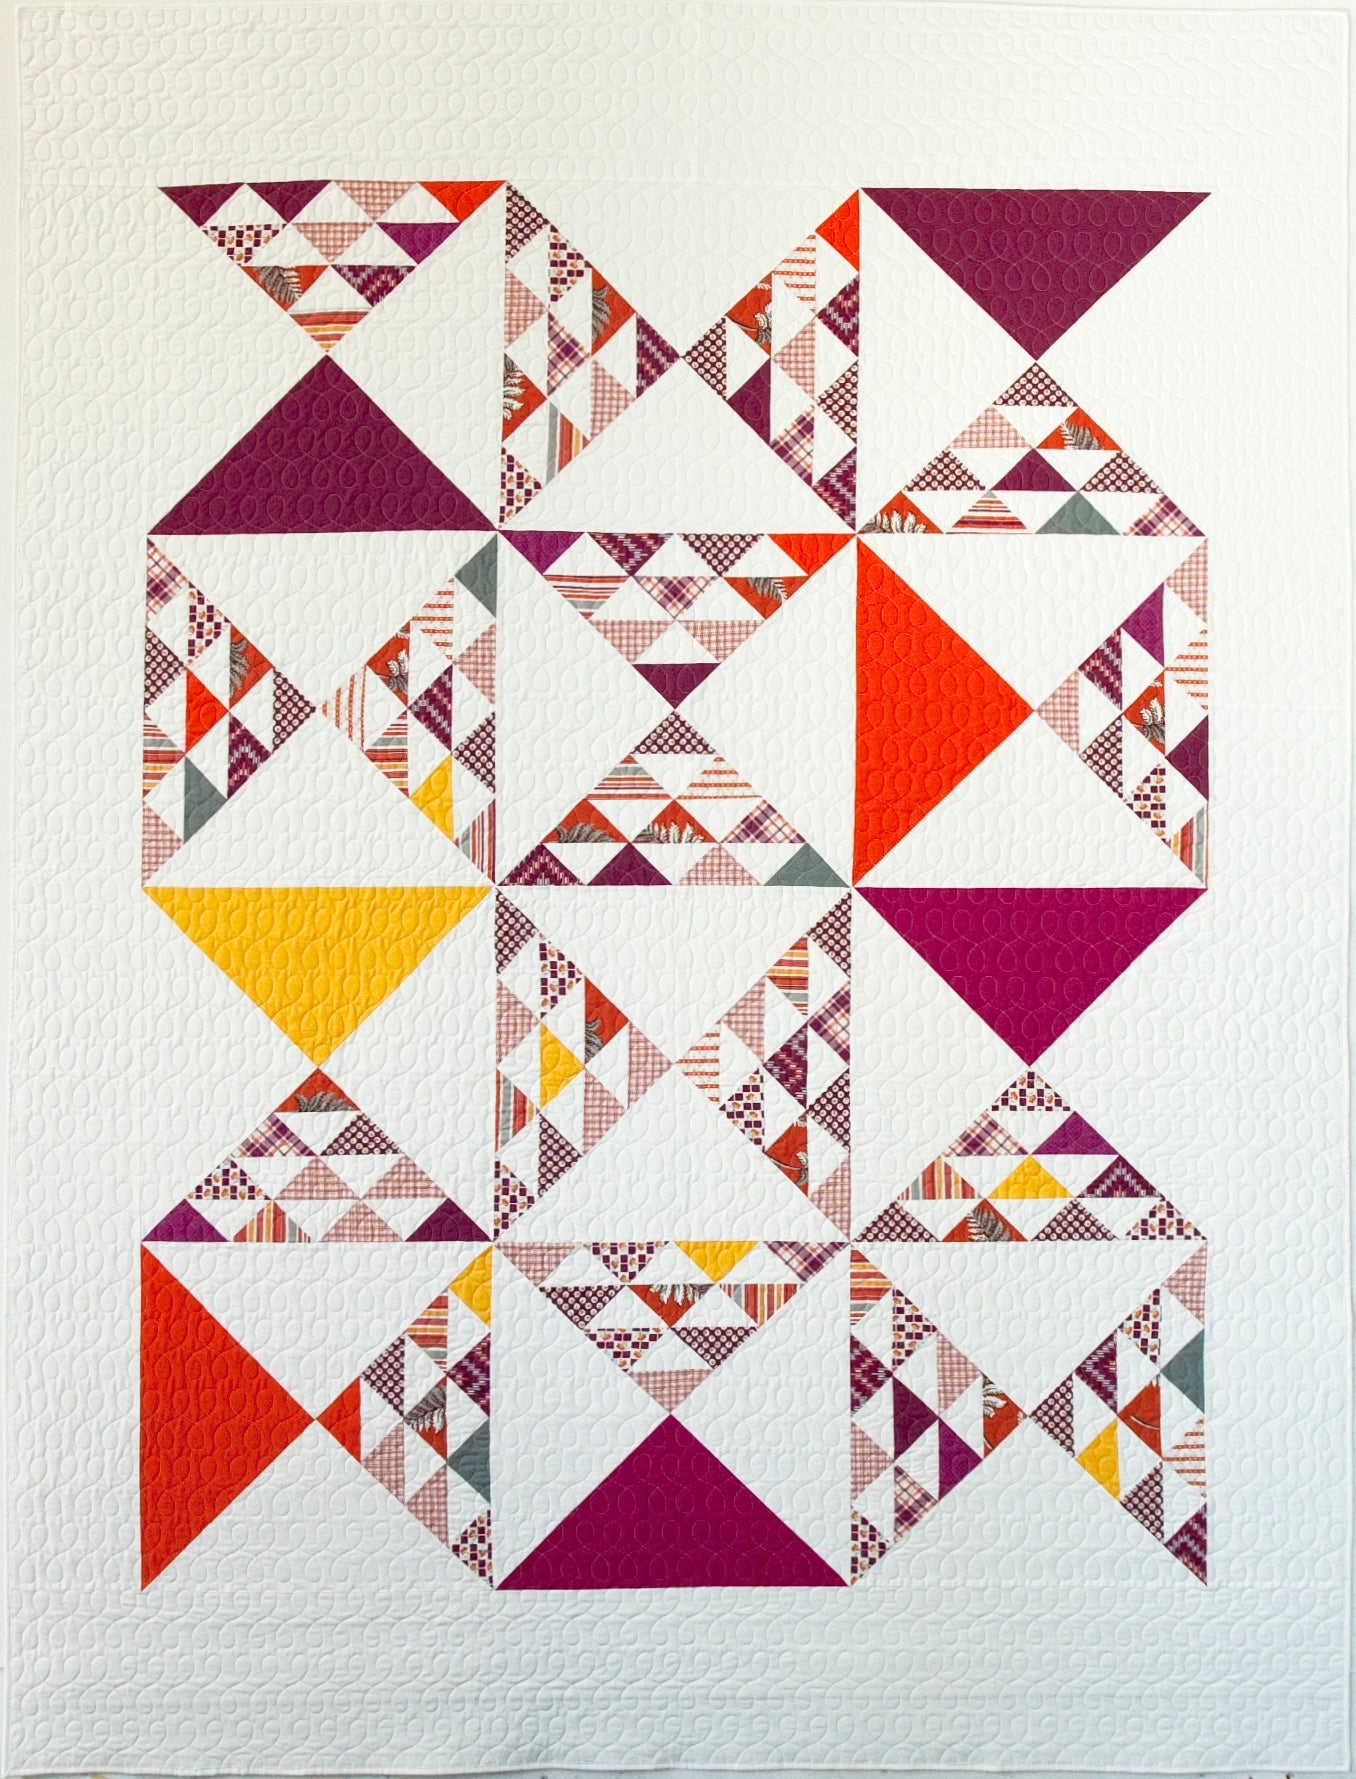 Spoolish quilt pattern